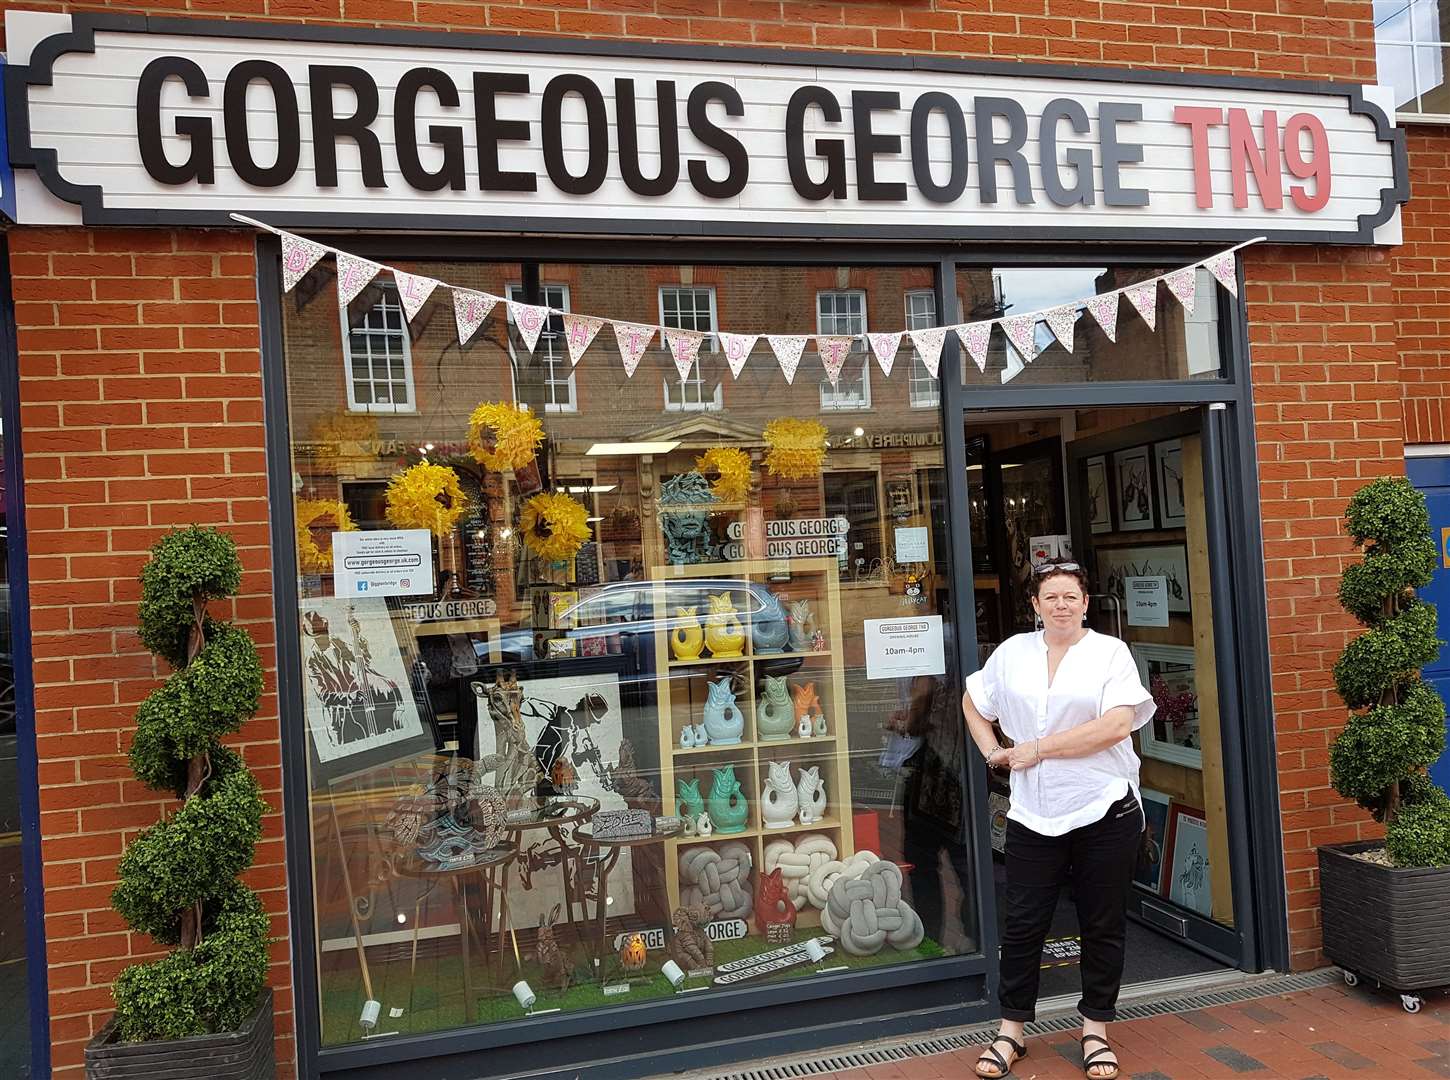 Teresa Seamer is the owner of Gorgeous George in Tonbridge